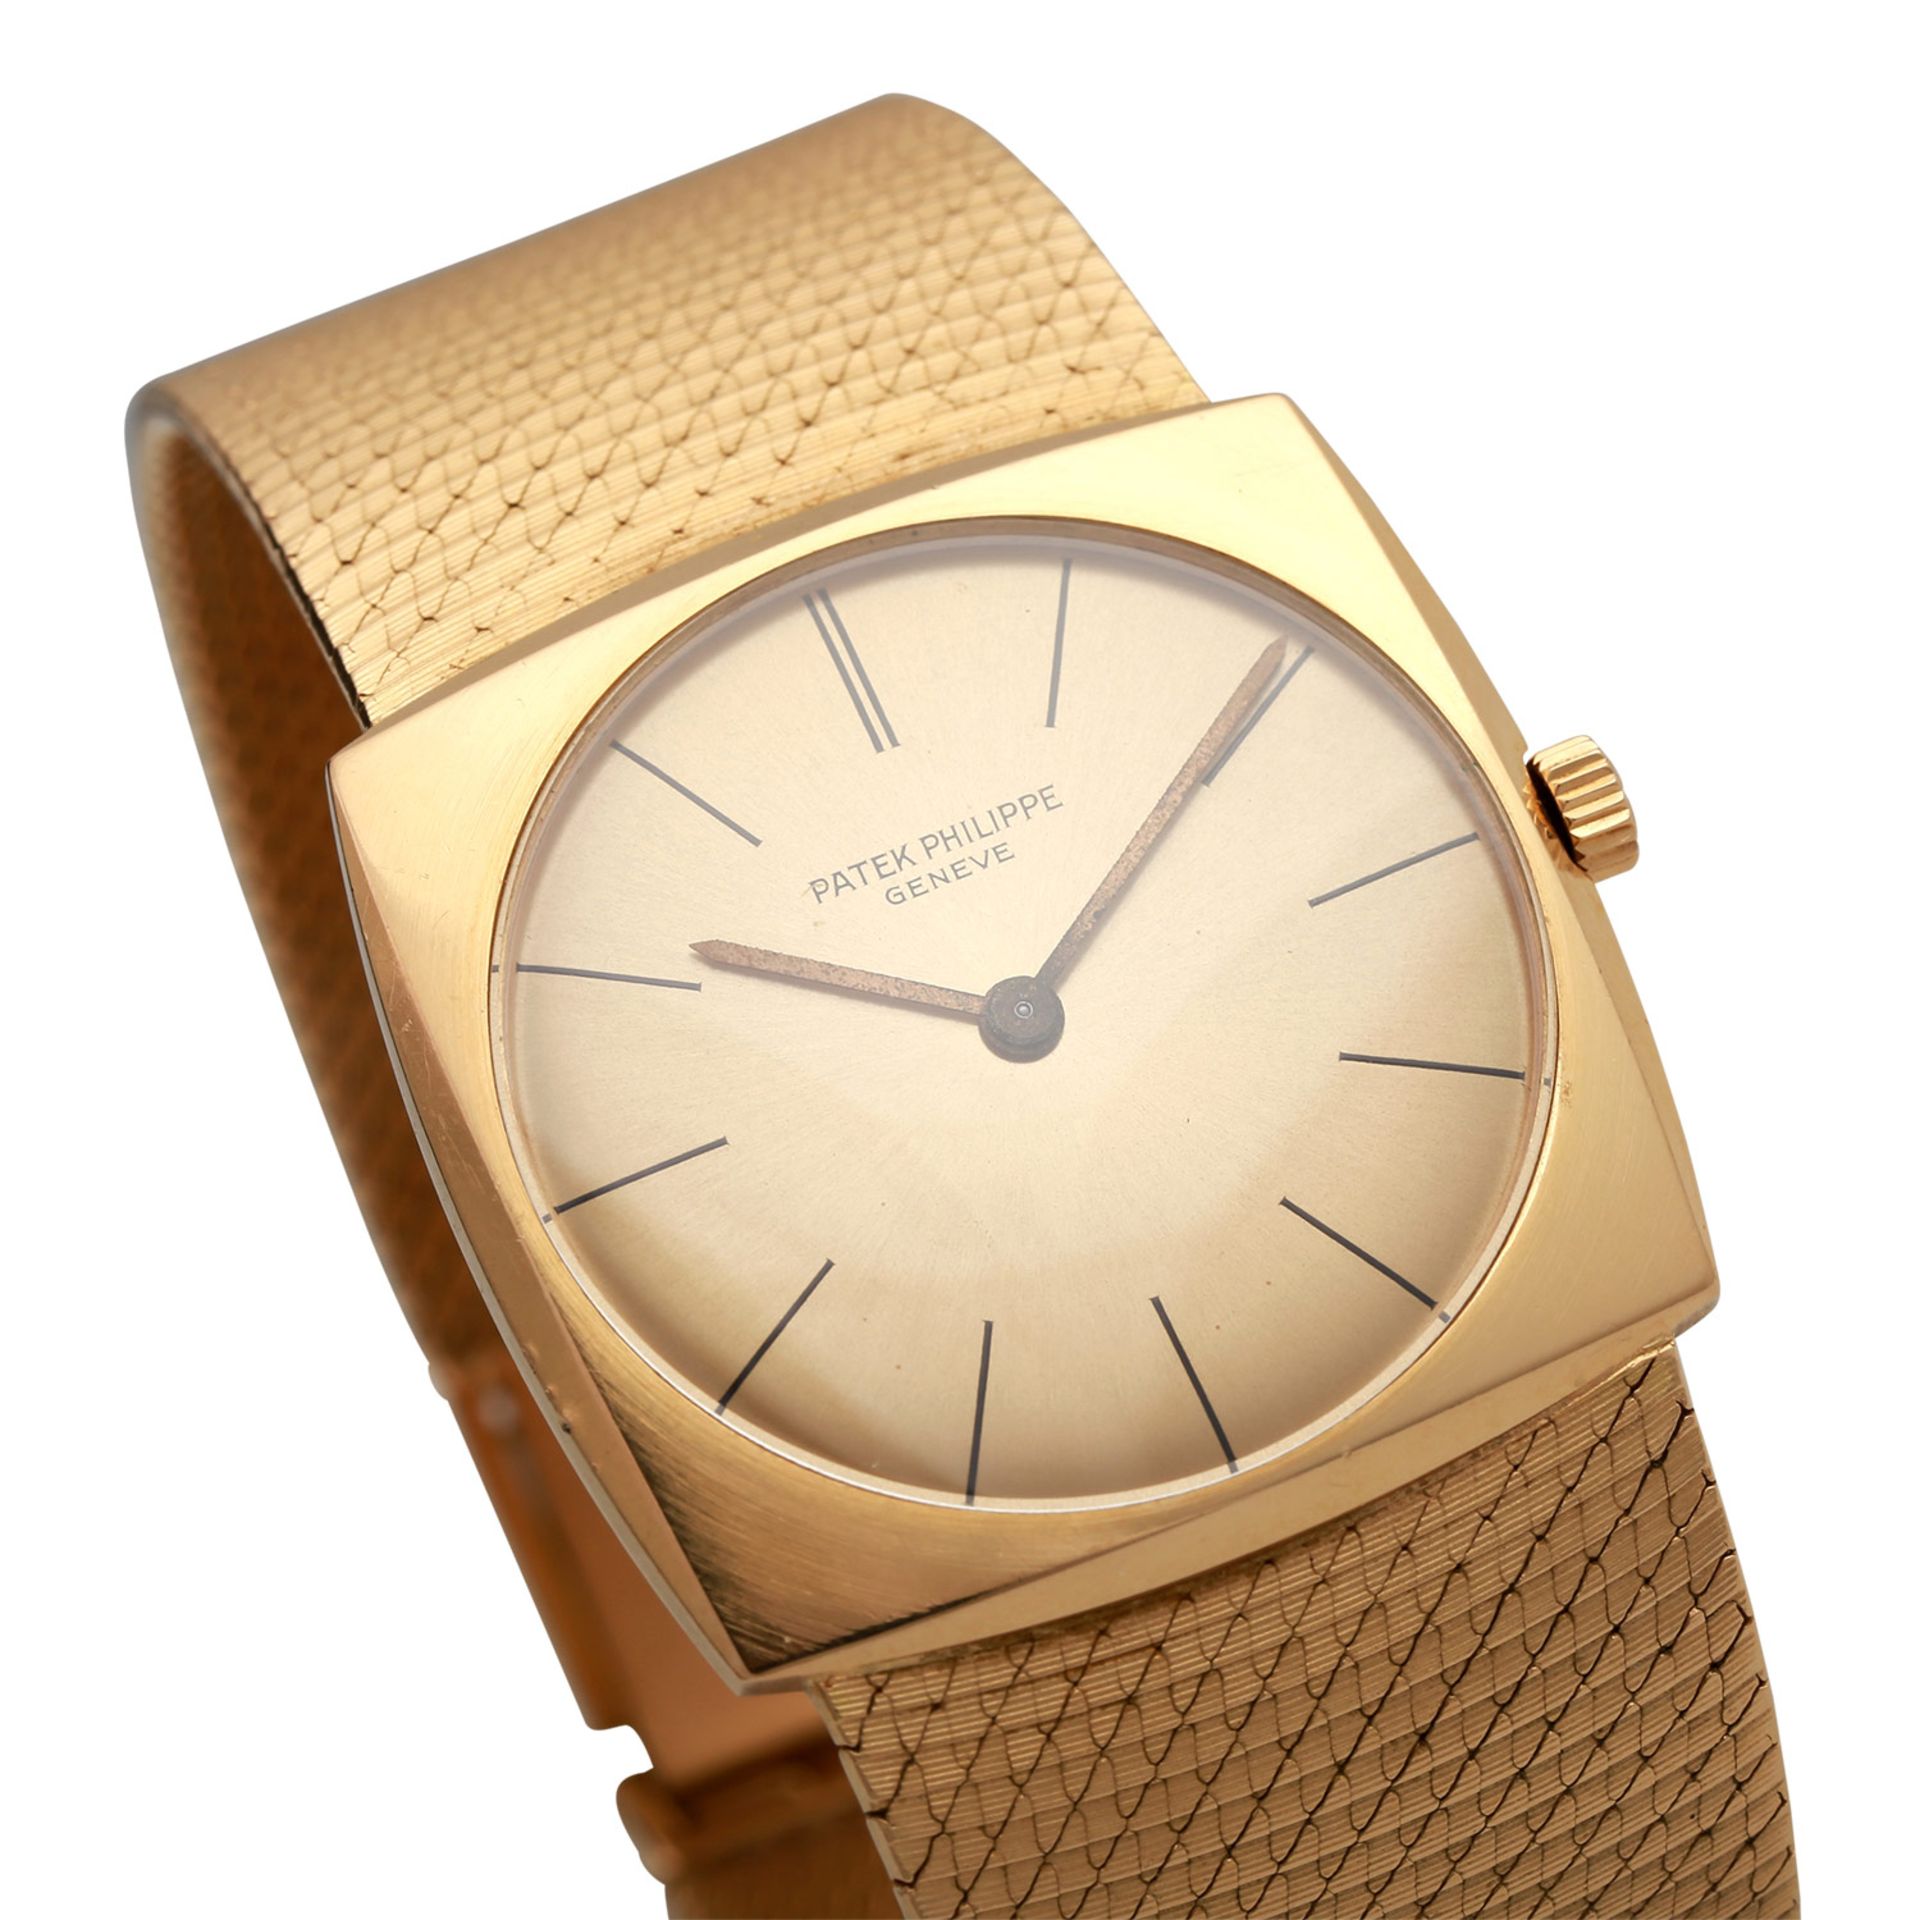 PATEK PHILIPPE Vintage Armbanduhr, Ref. 3523/1, ca. 1960er Jahre.Gold 18K. Handaufzugwerk, Cal. 175. - Bild 8 aus 9